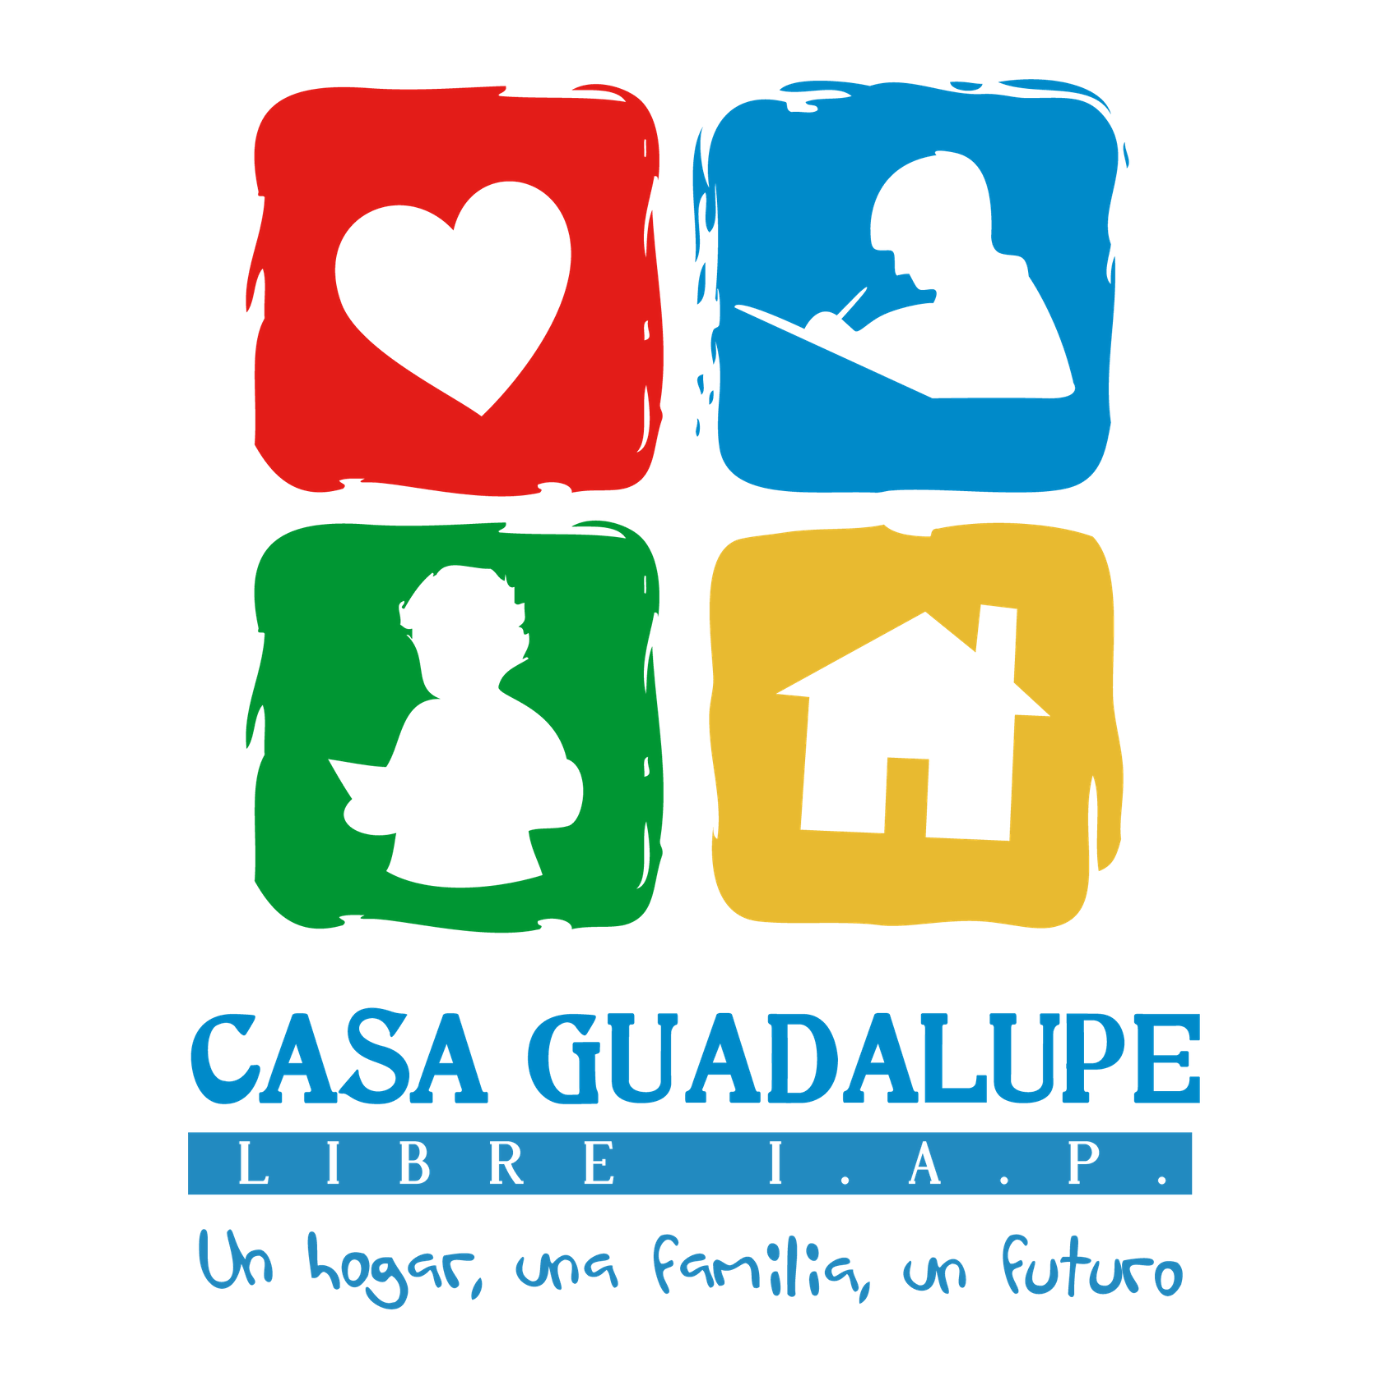 Casa Guadalupe Libre IAP: Un hogar para los más vulnerables